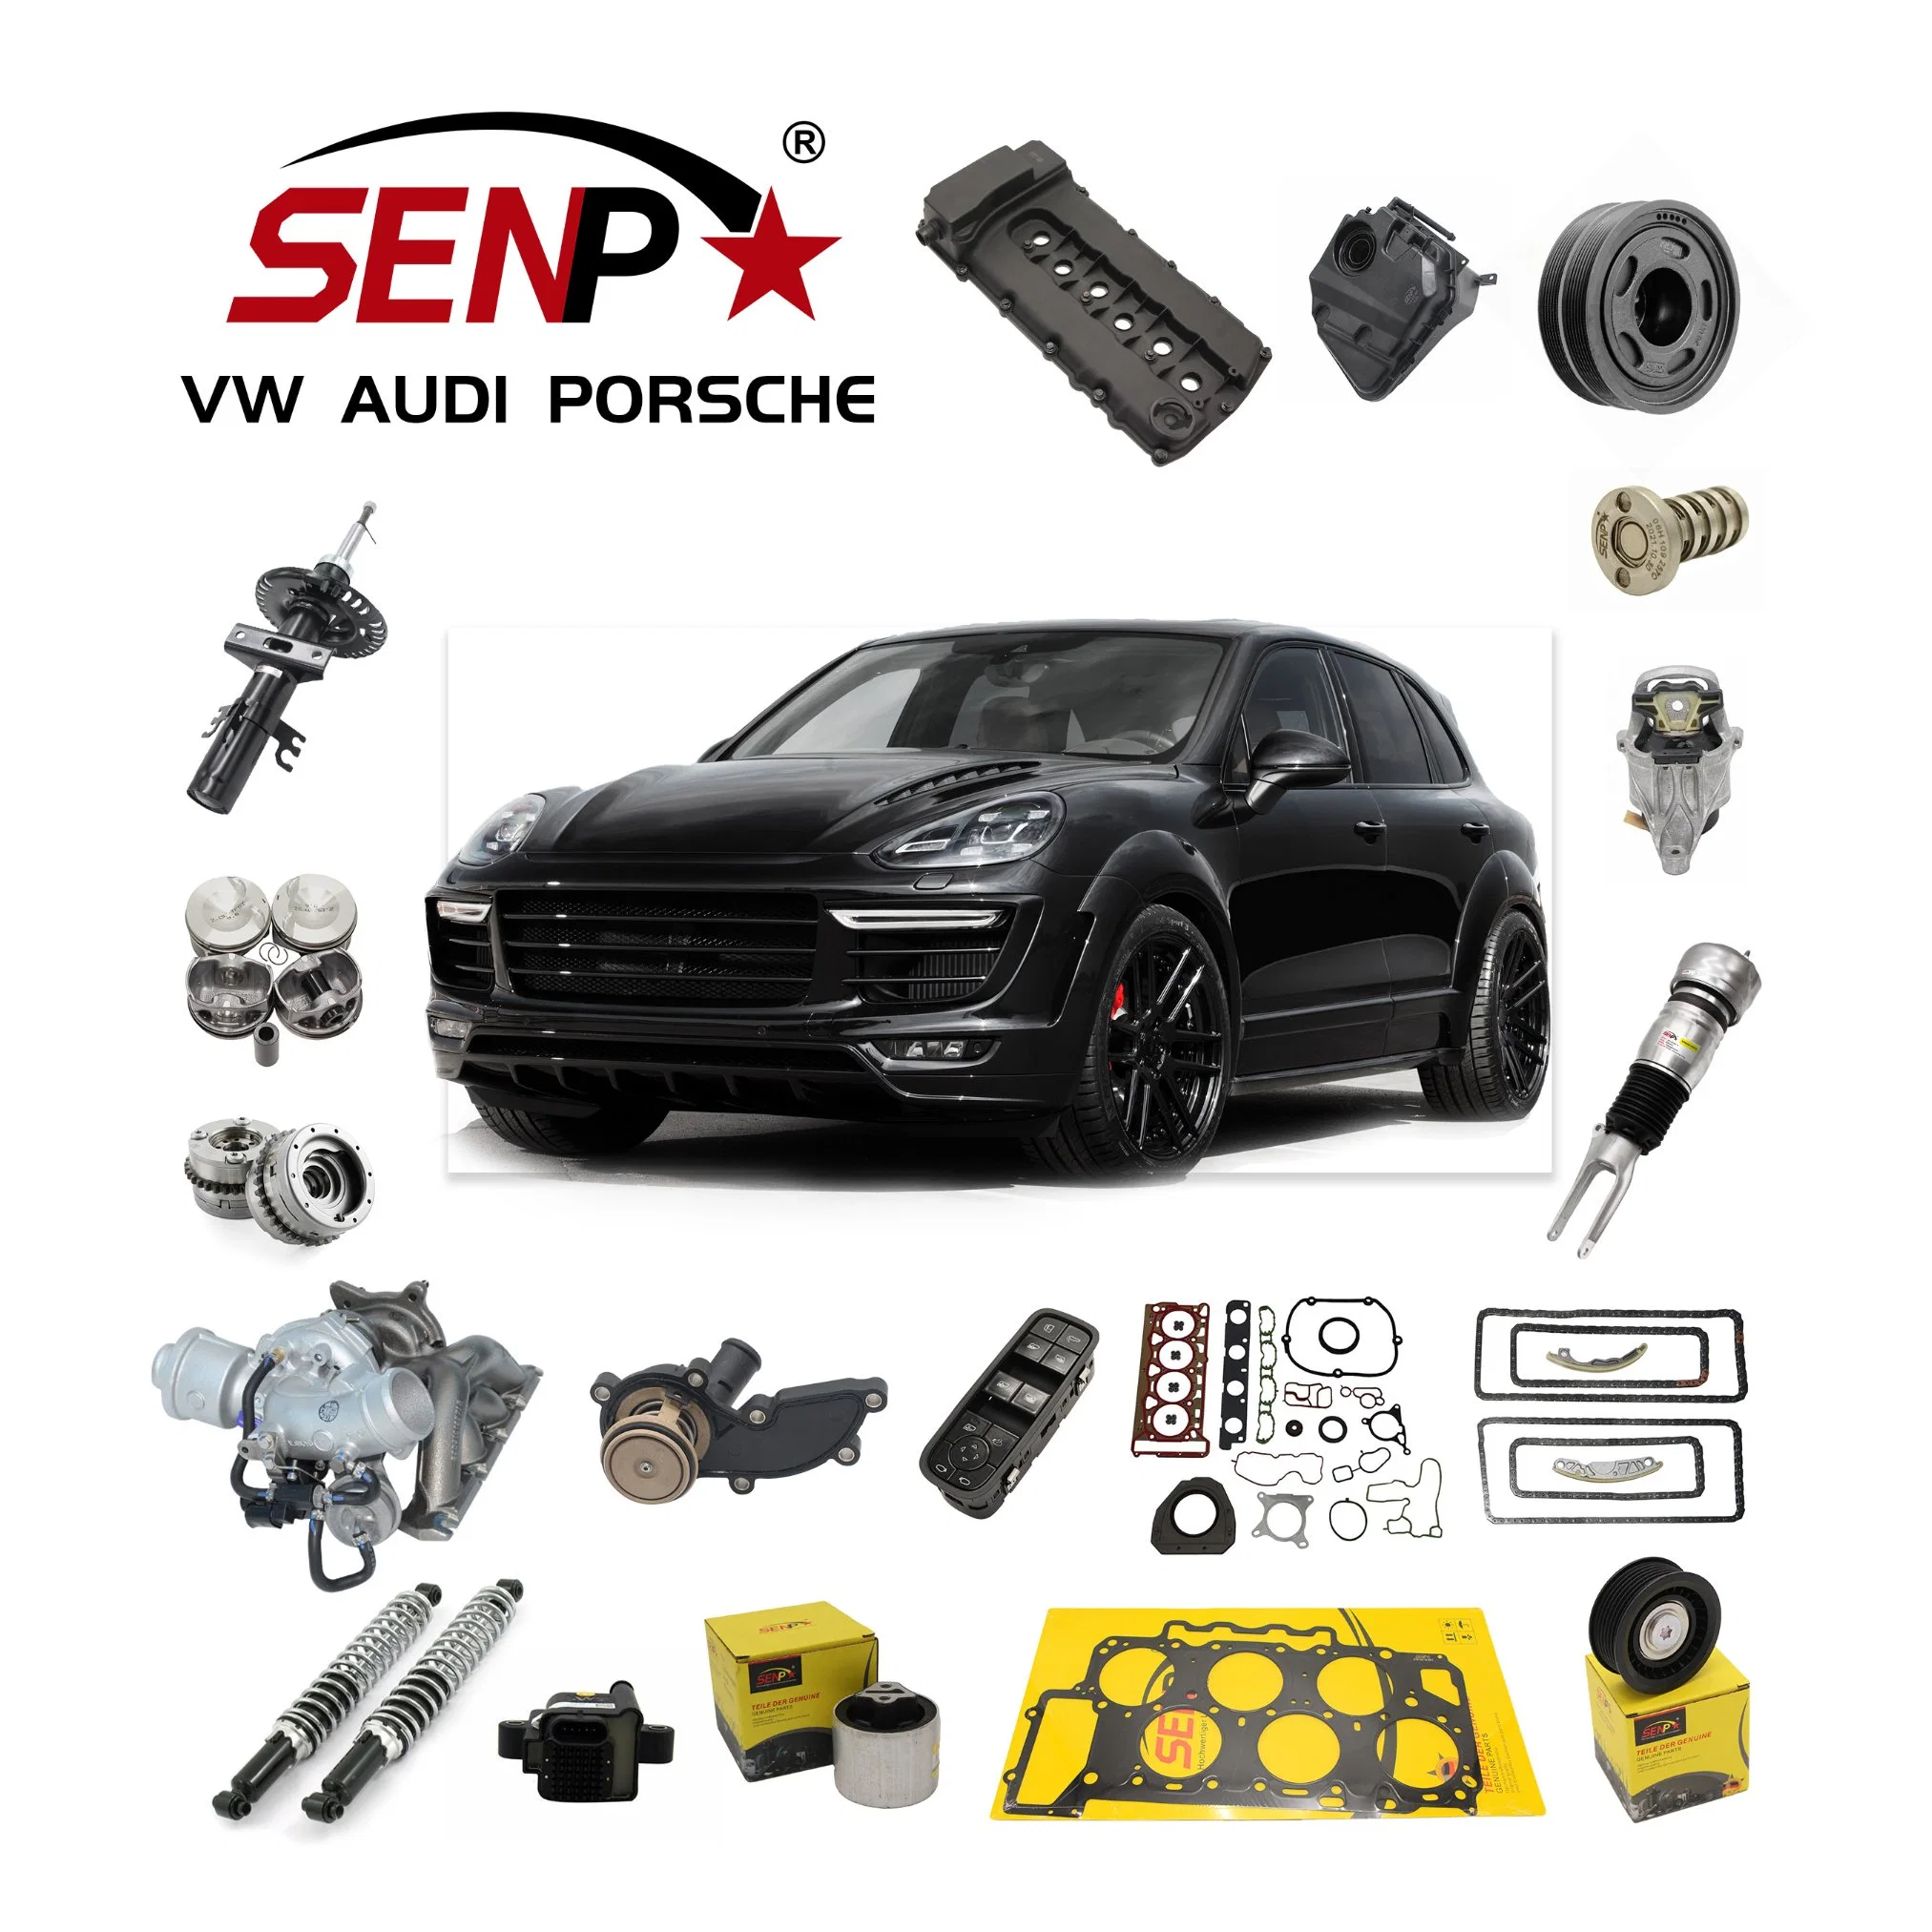 Senp High Quality All Germany Car Other Body Auto Parts Automotive Engine Spare Part Accessories for Audi VW Porsche Auto Parts